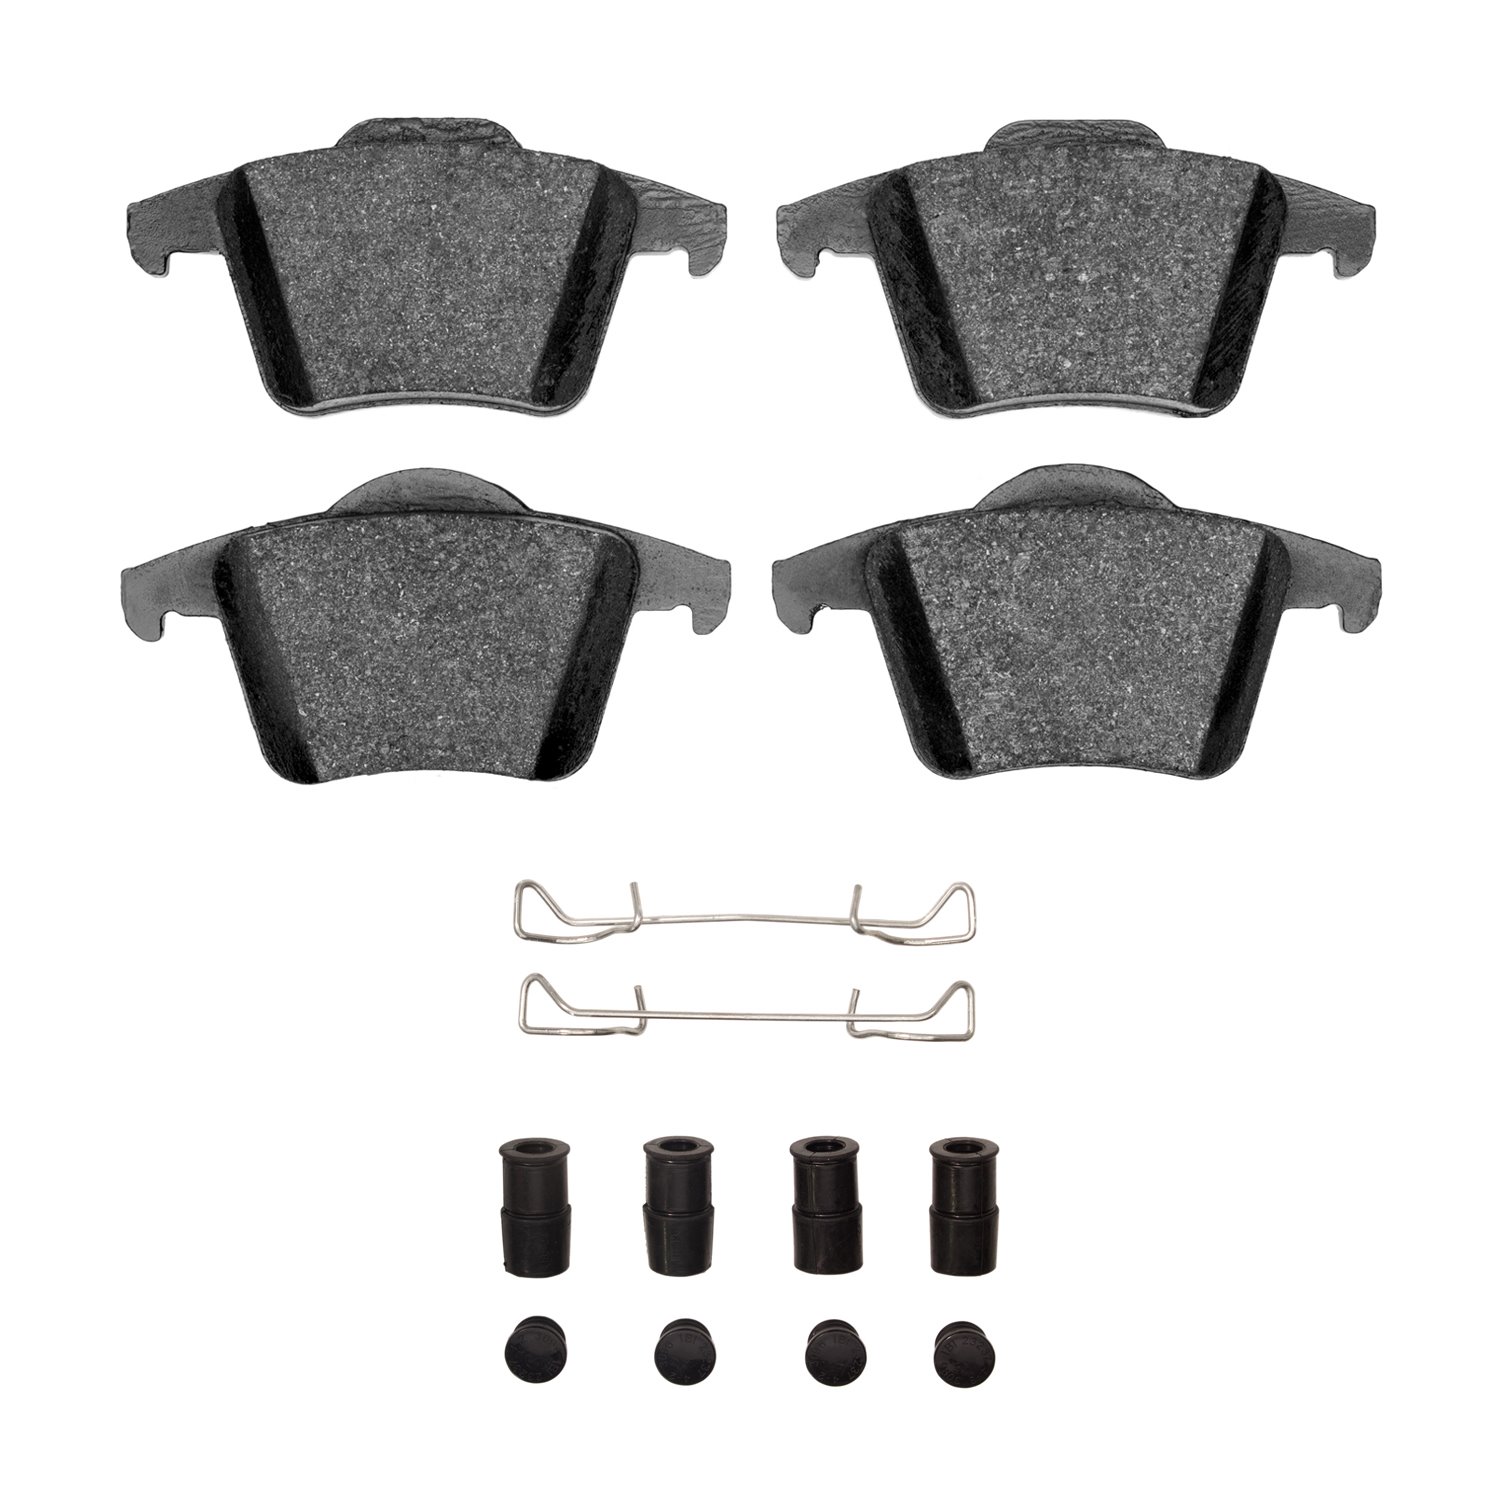 1310-0980-01 3000-Series Ceramic Brake Pads & Hardware Kit, 2003-2014 Volvo, Position: Rear